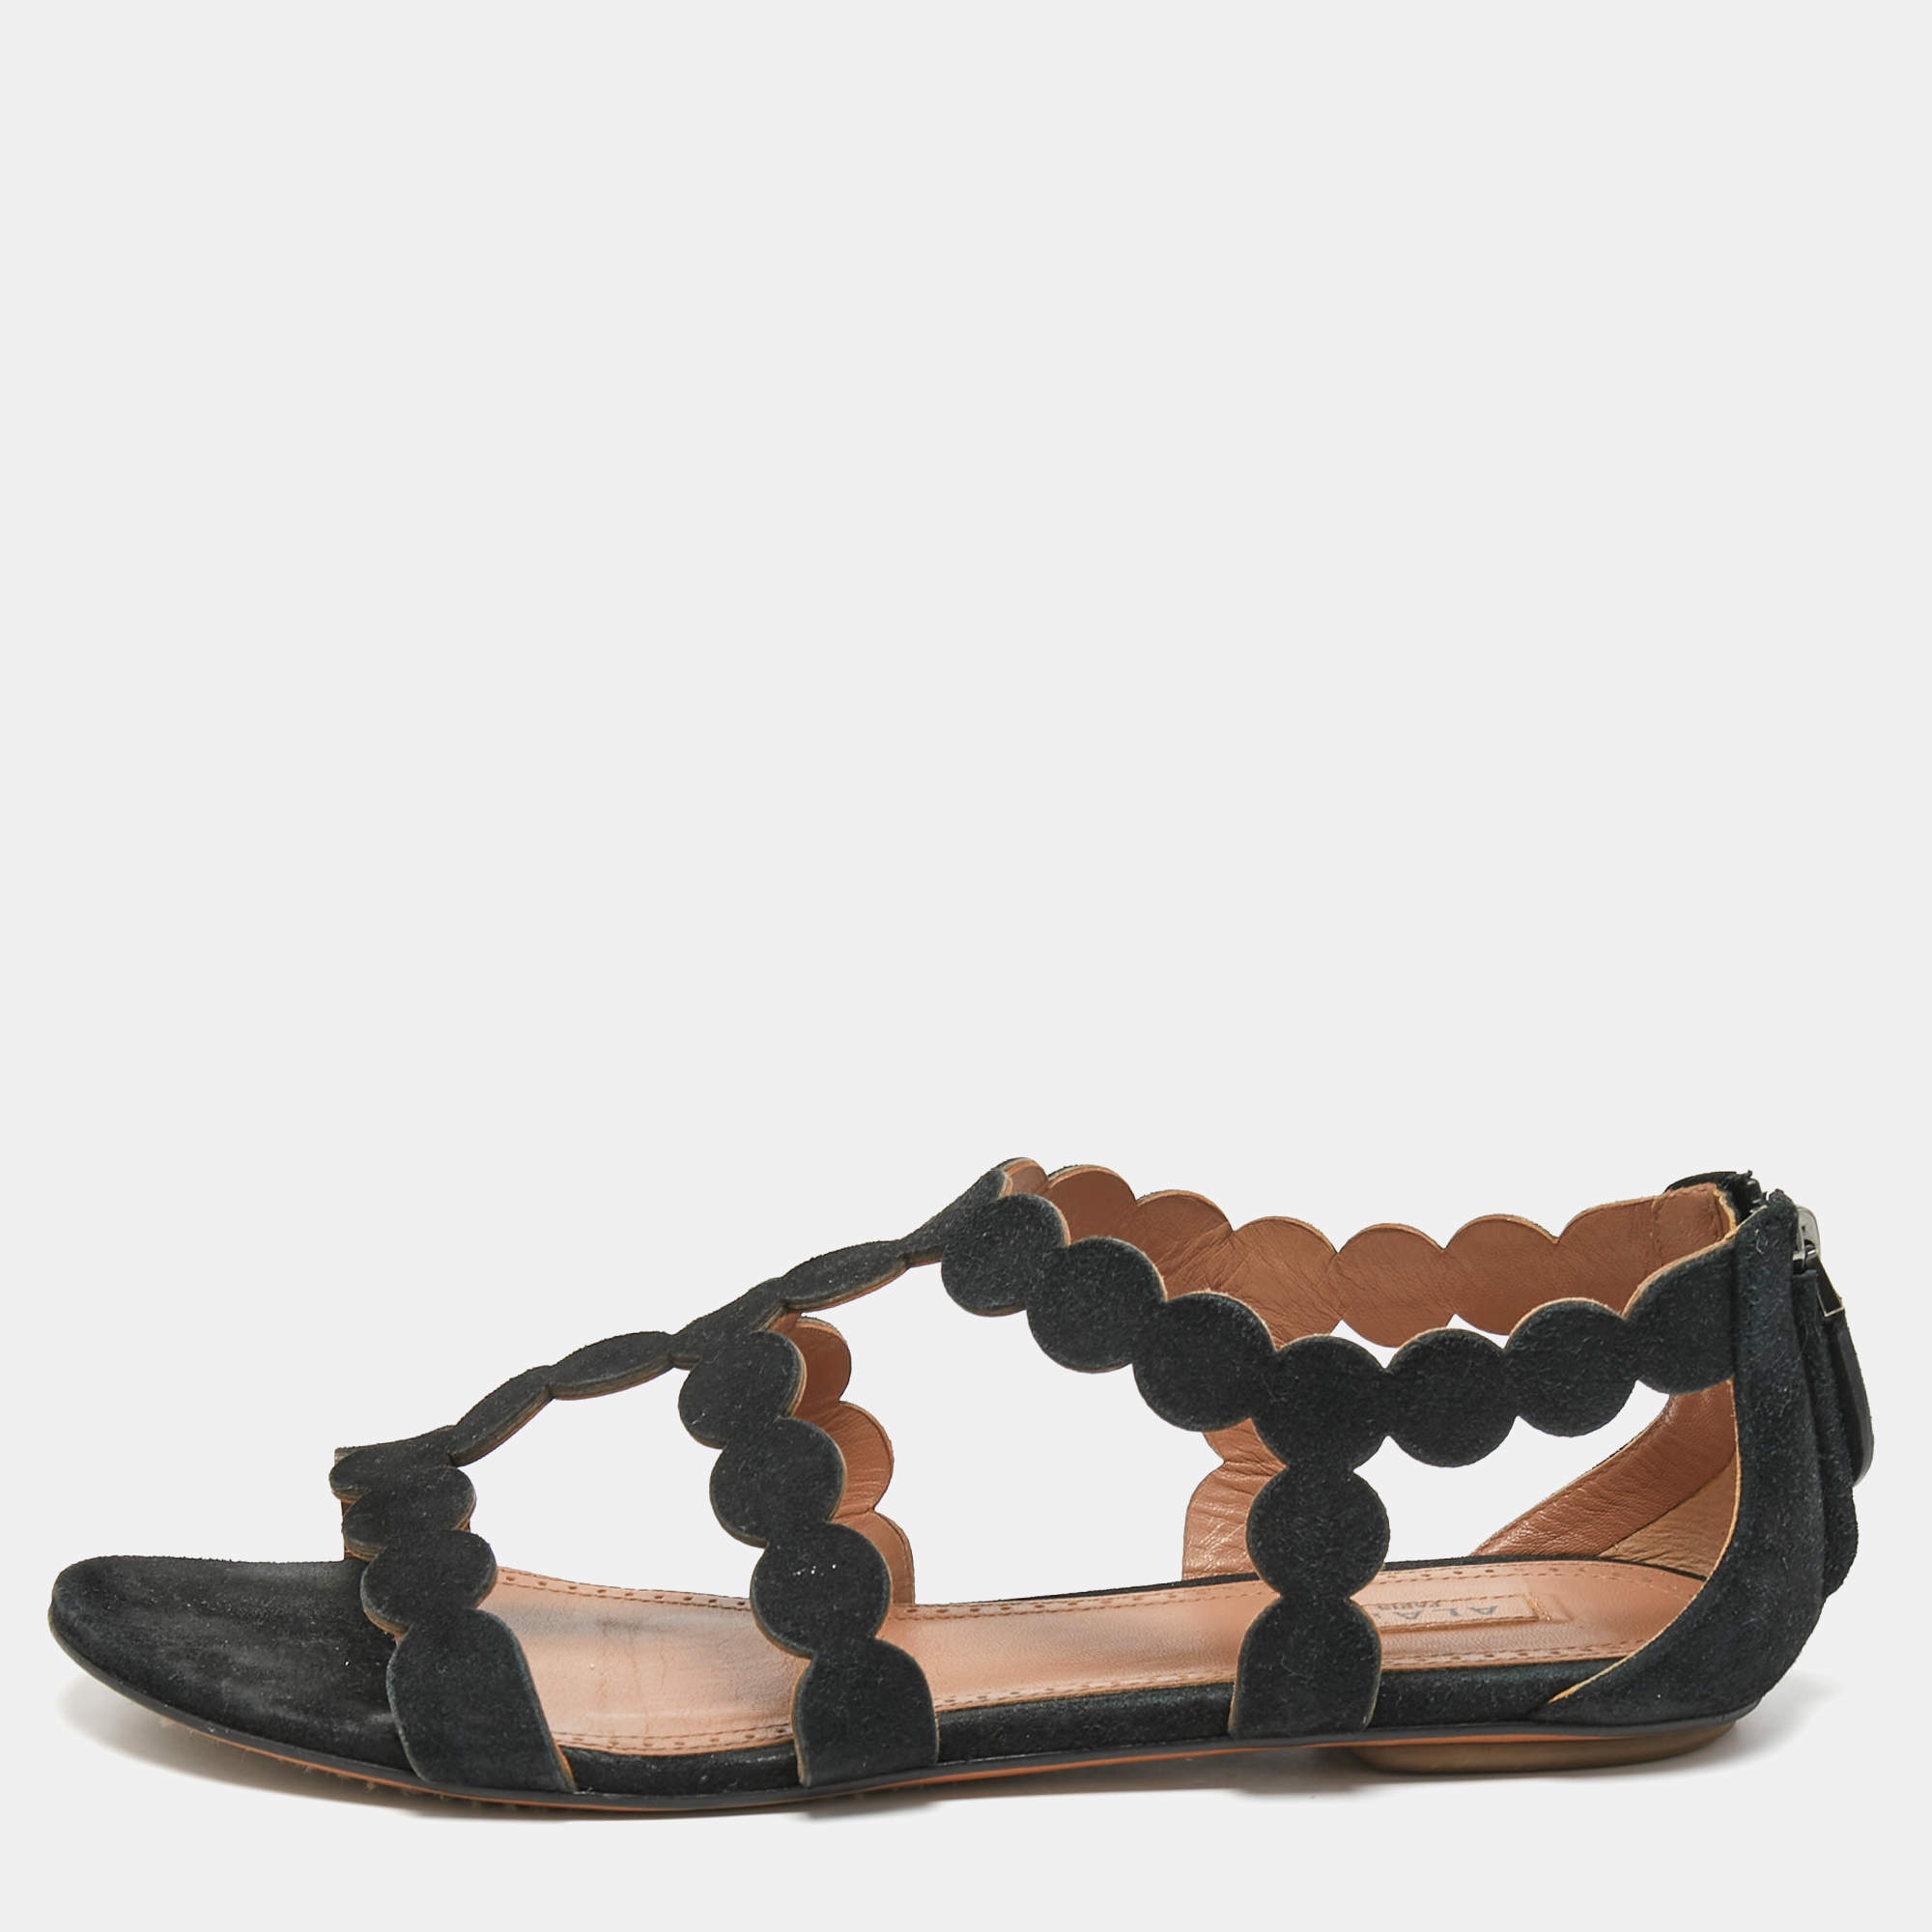 Alaia Black Suede Scallop Flat Sandals Size 39 Alaia